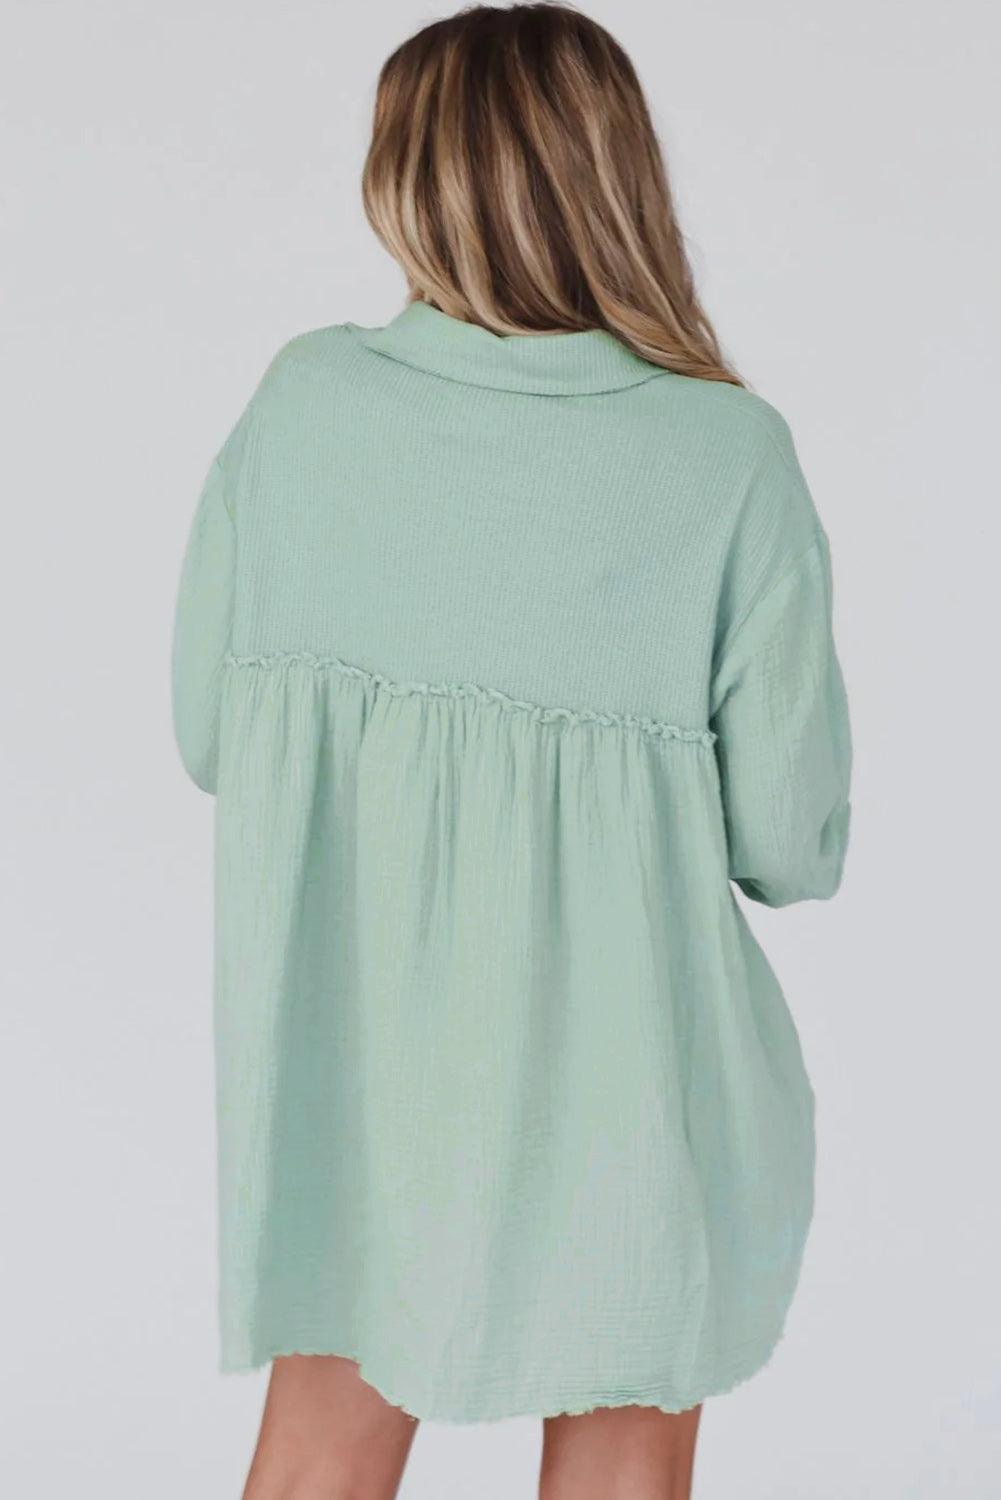 Green Patchwork Crinkle Puff Sleeve Shirt Dress - L & M Kee, LLC